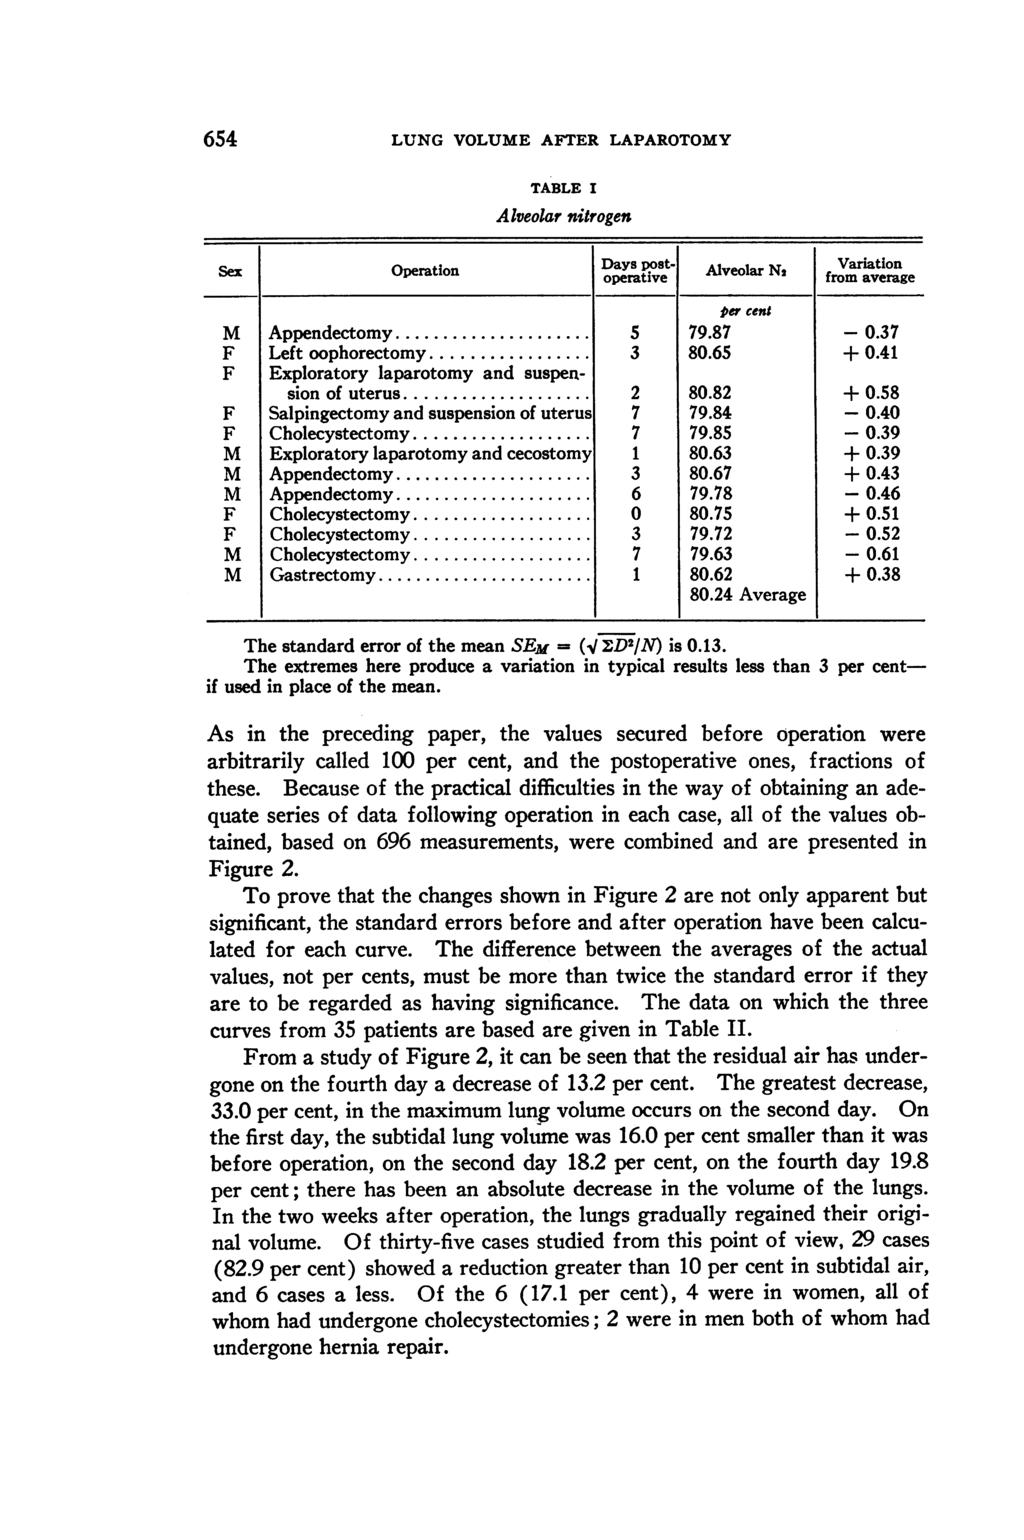 654 LUNG VOLUME AFTER LAPAROTOMY TABLE I Alveolar nitrogen Sex Operation Days post- Alveolar Ni fariatiom per cent M Appendectomy.5 79.87-0.37 F Left oophorectomy.3 80.65 + 0.